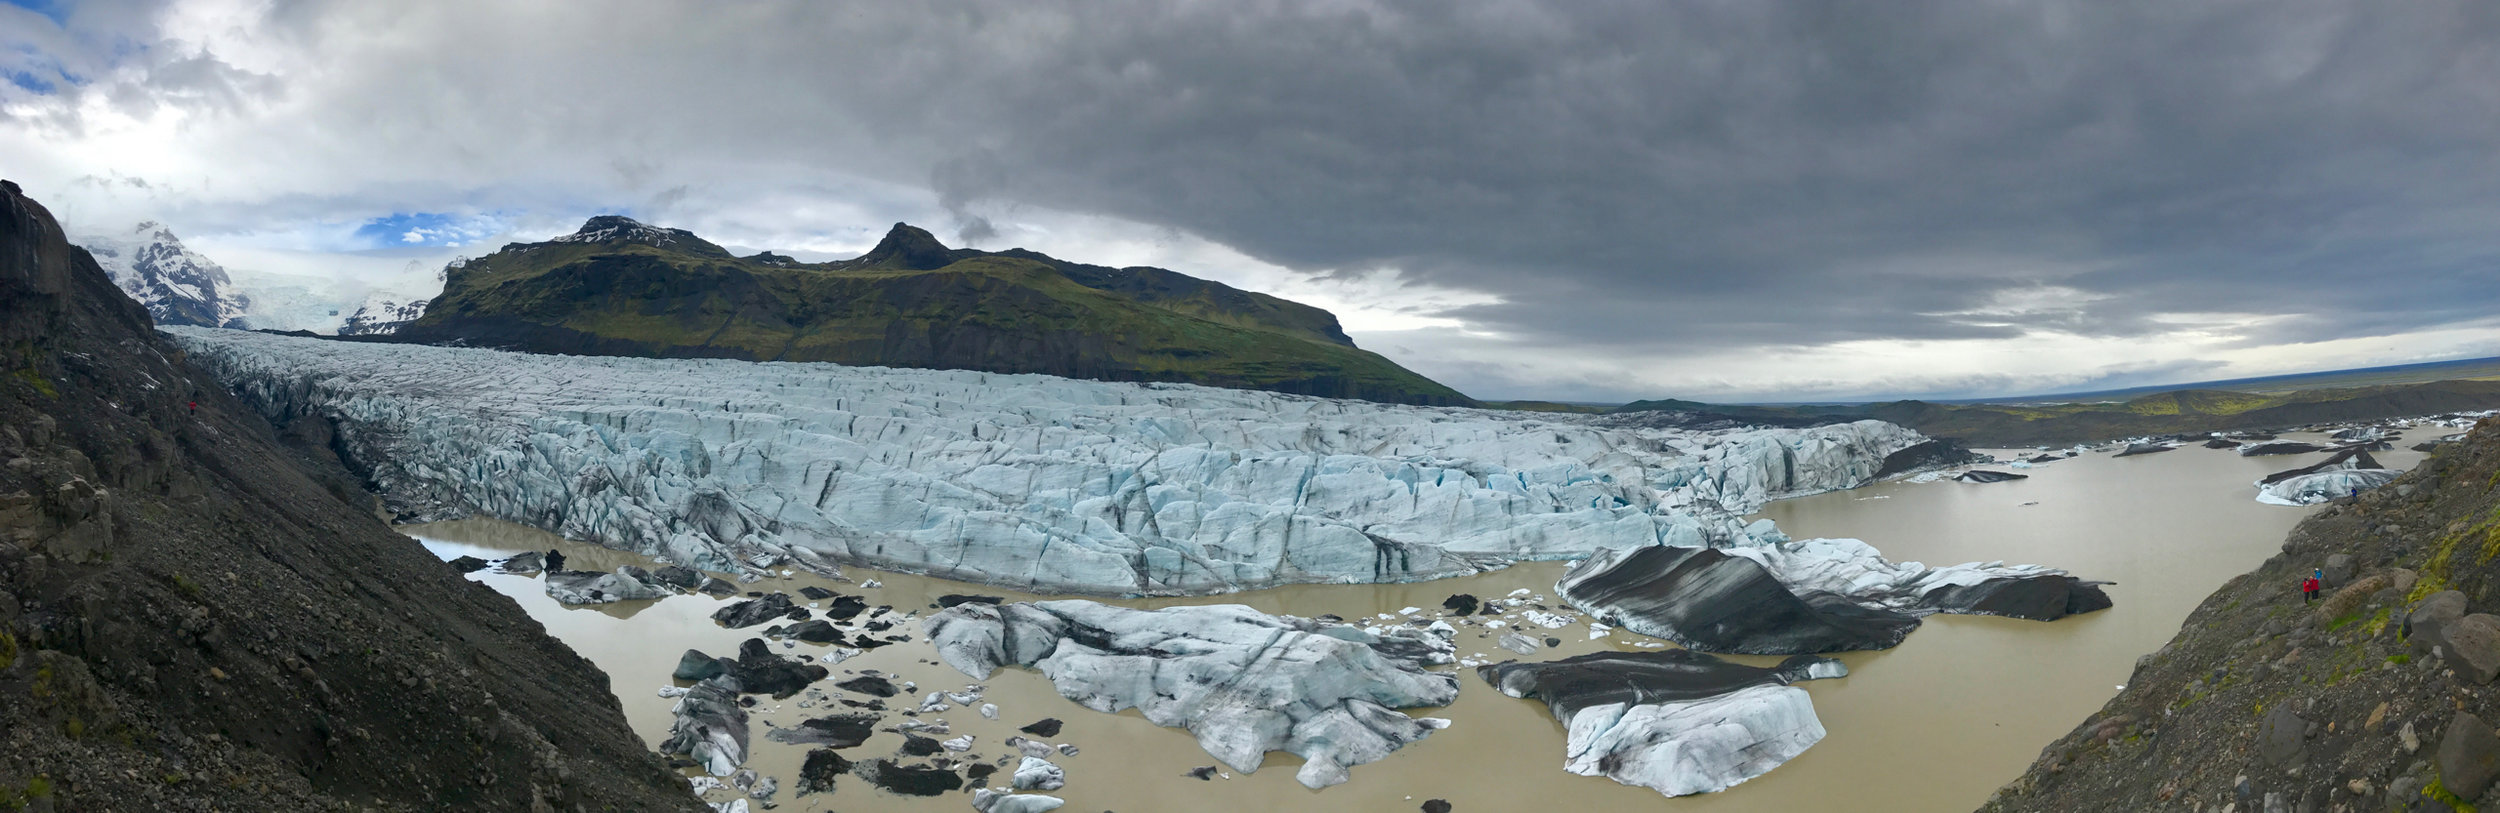 Svinafelljokull glacier